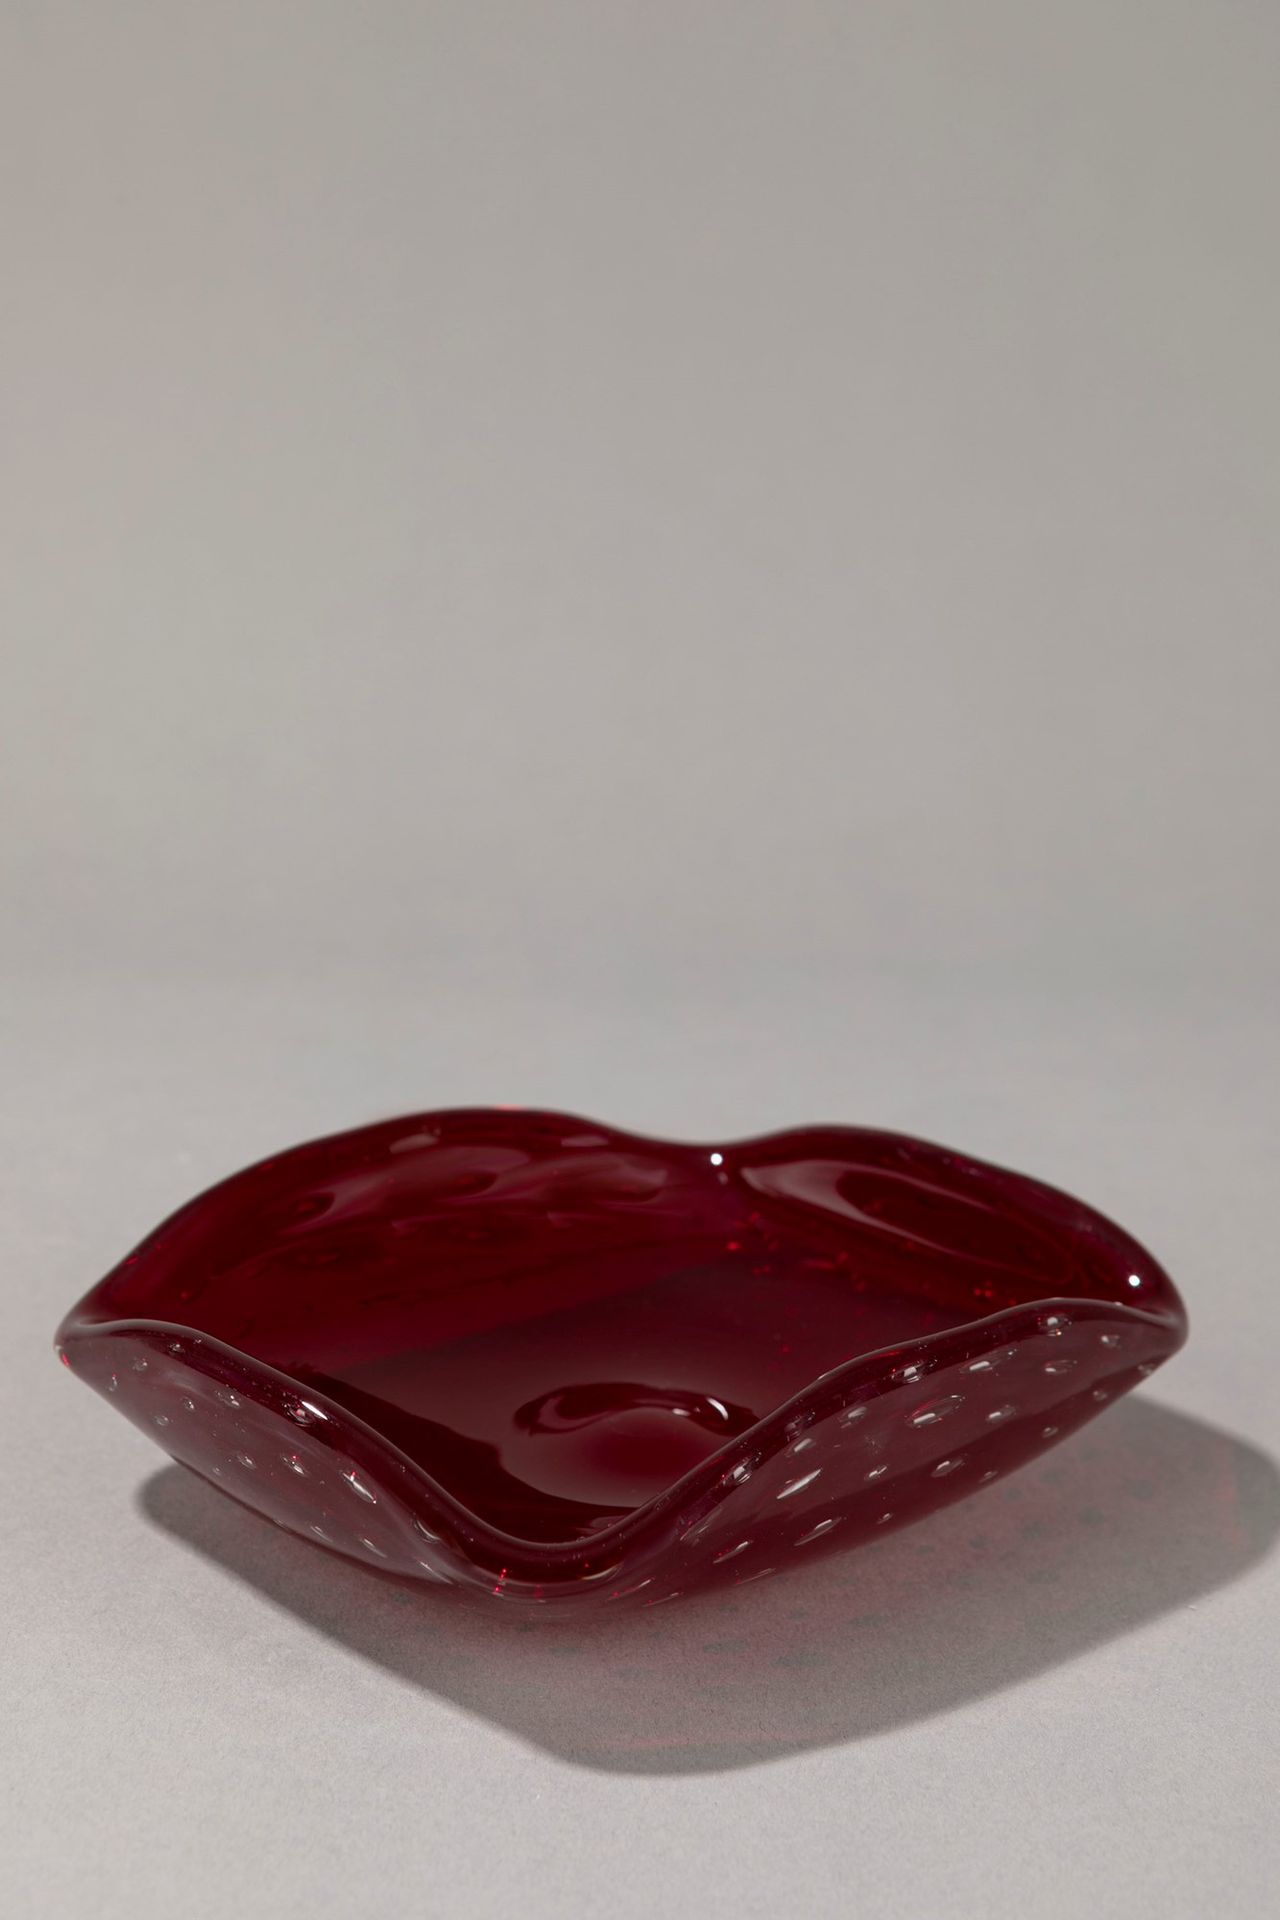 VENINI Bowl , 1950 ca. 

H 4,5 x 15,5 x 12,5 cm
bullicante glass.

Acyd sign